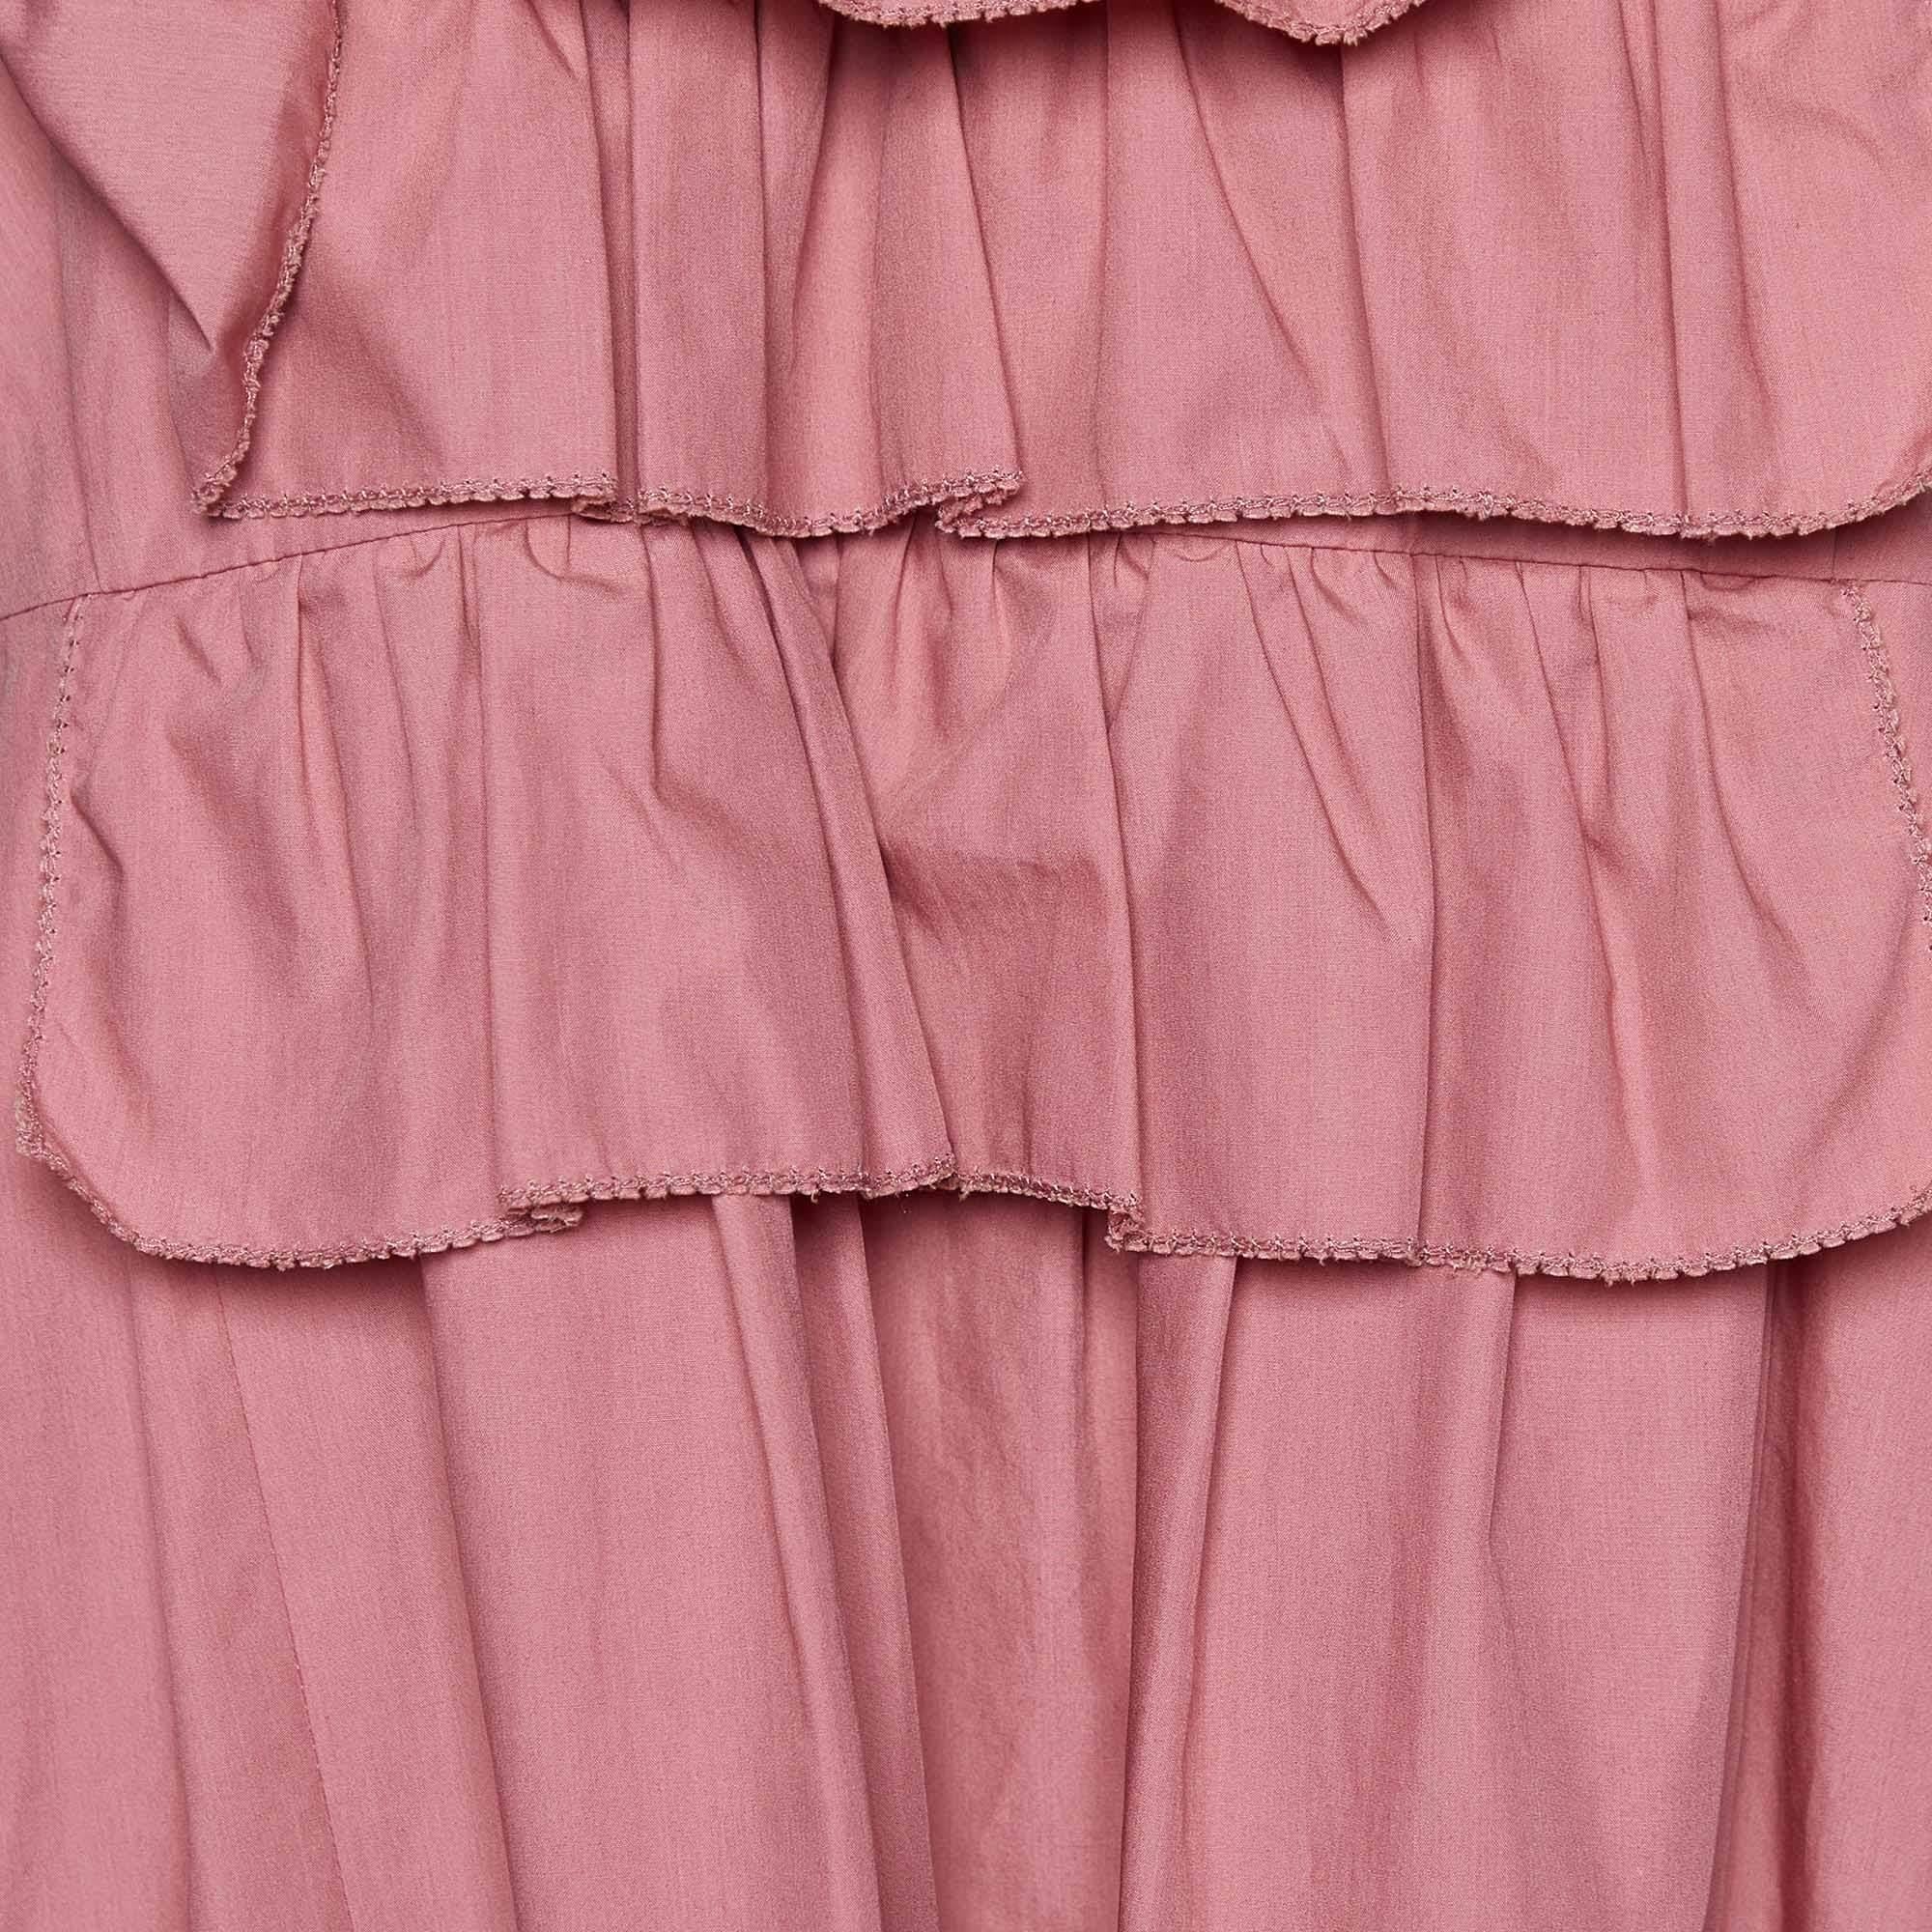 Moschino Pink Cotton Ruffle Detail Top L In Excellent Condition For Sale In Dubai, Al Qouz 2